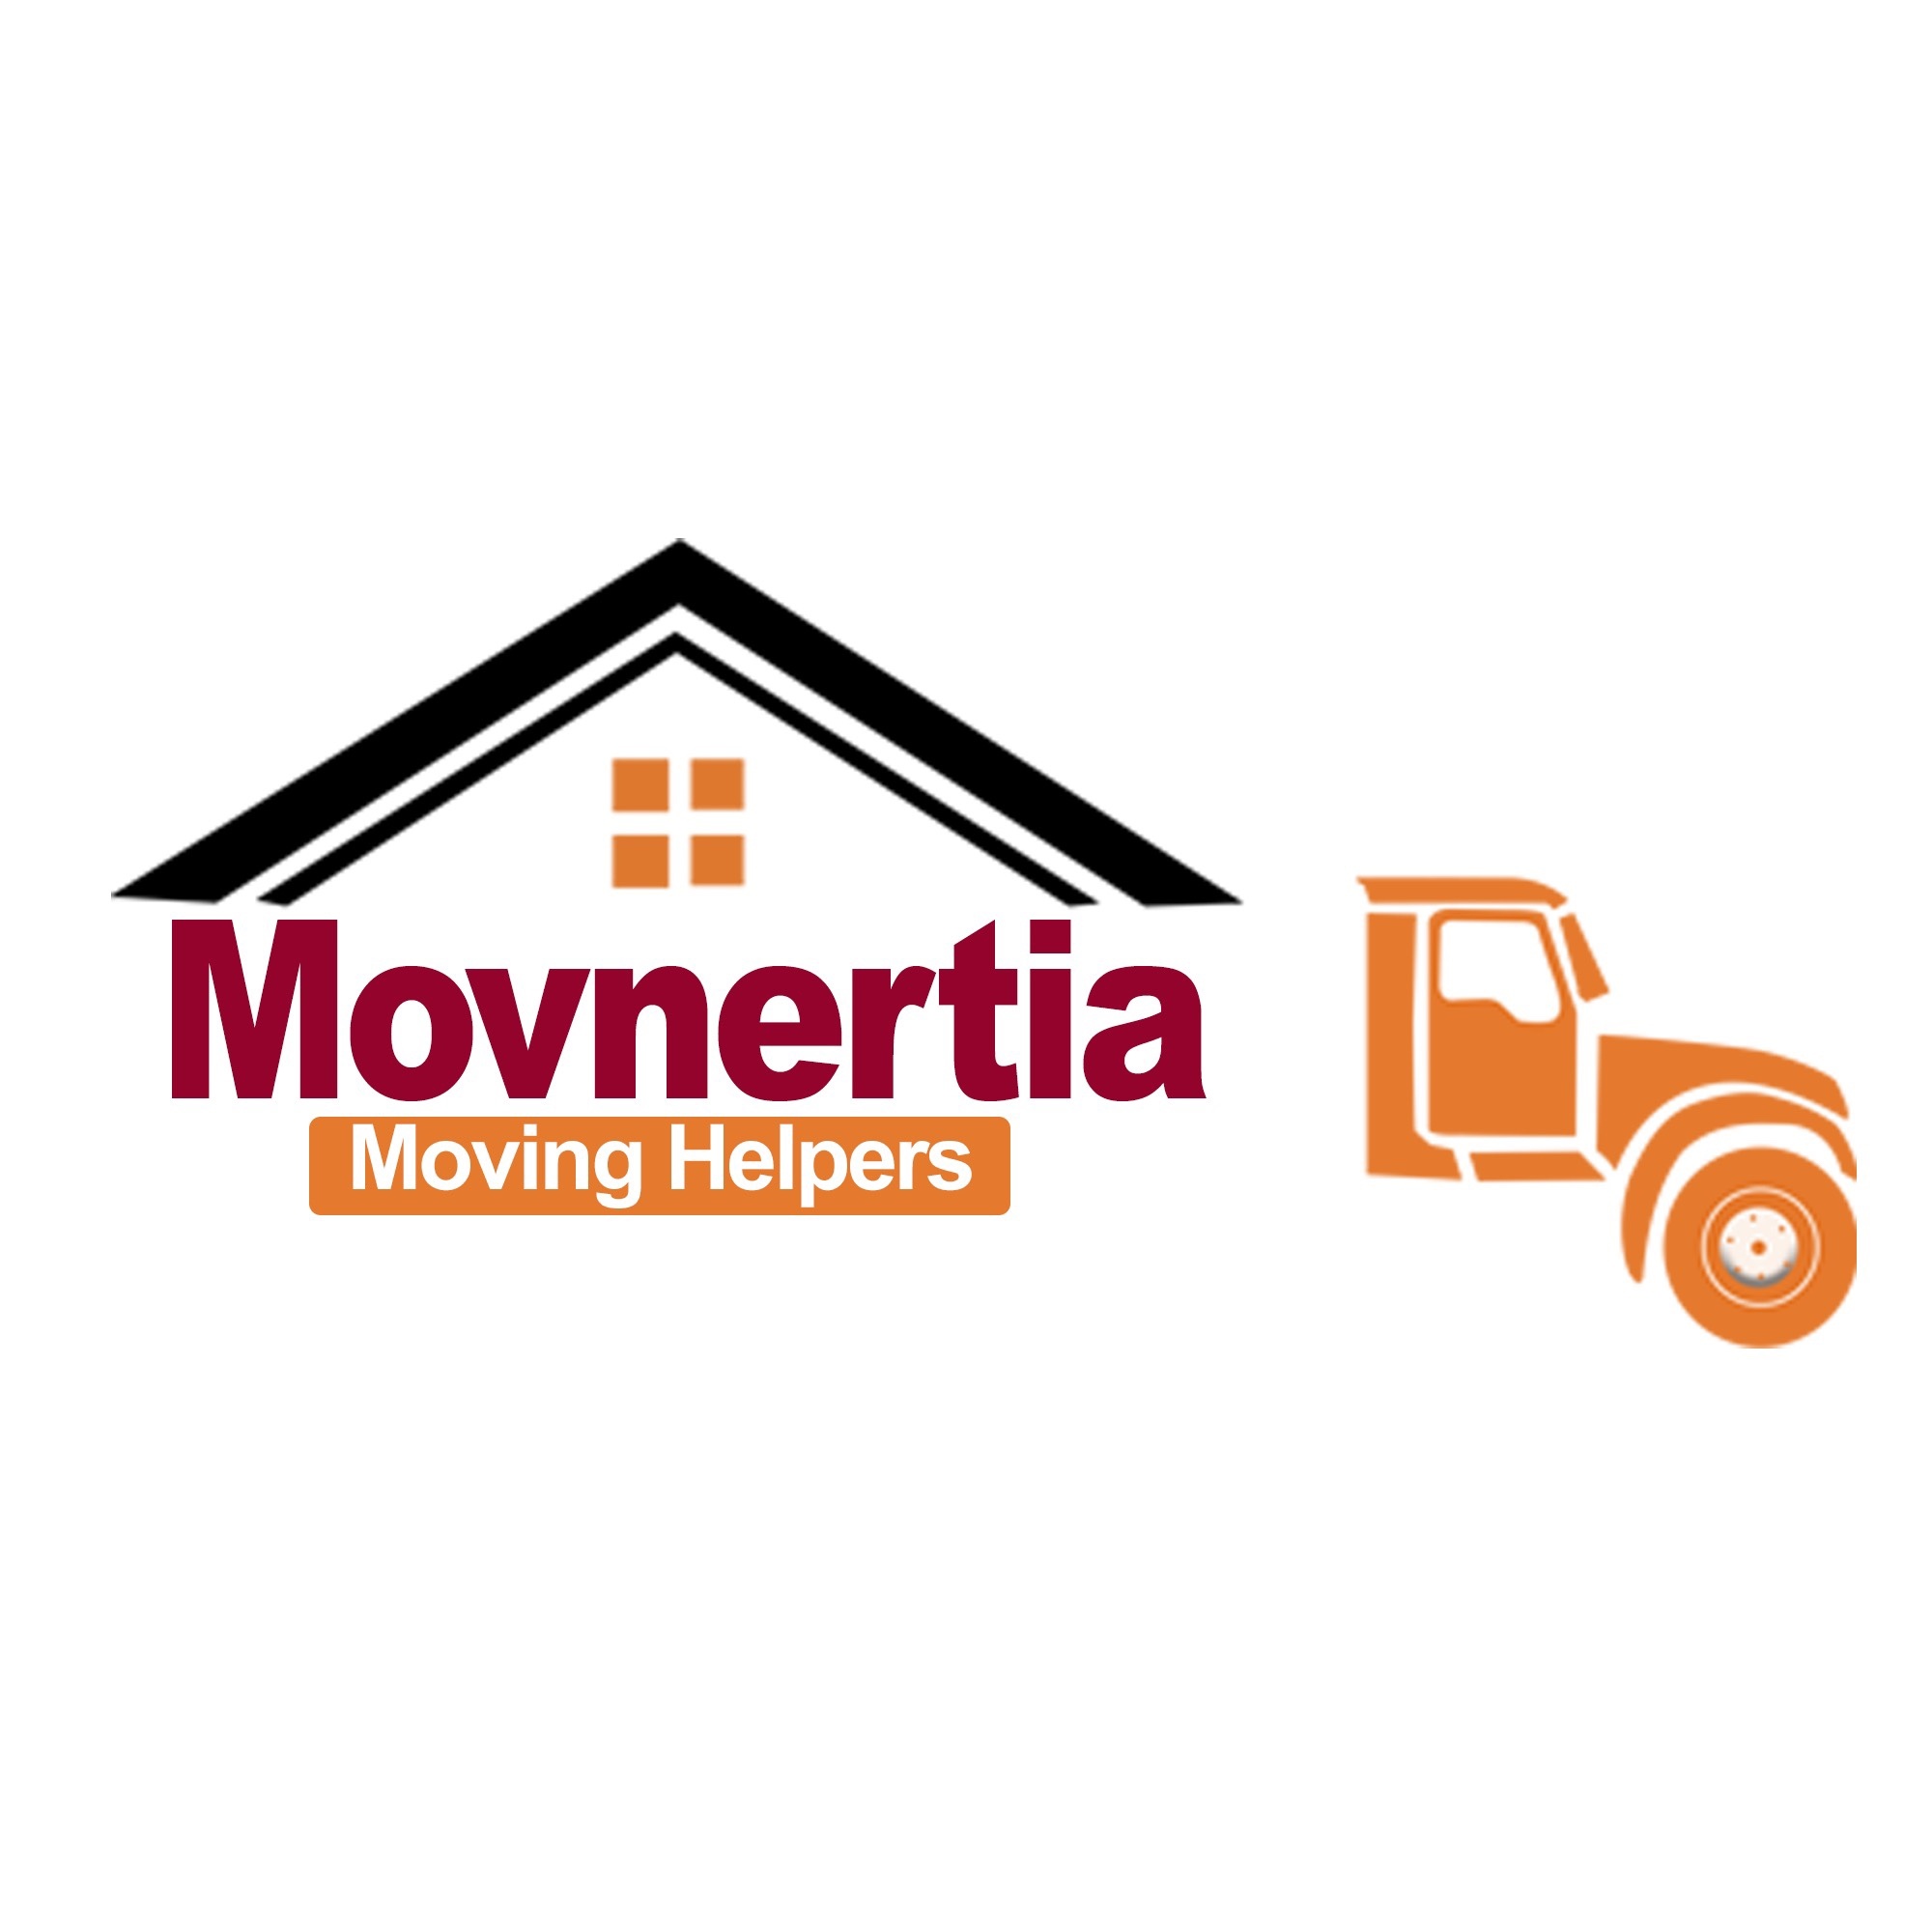 Movnertia's logo